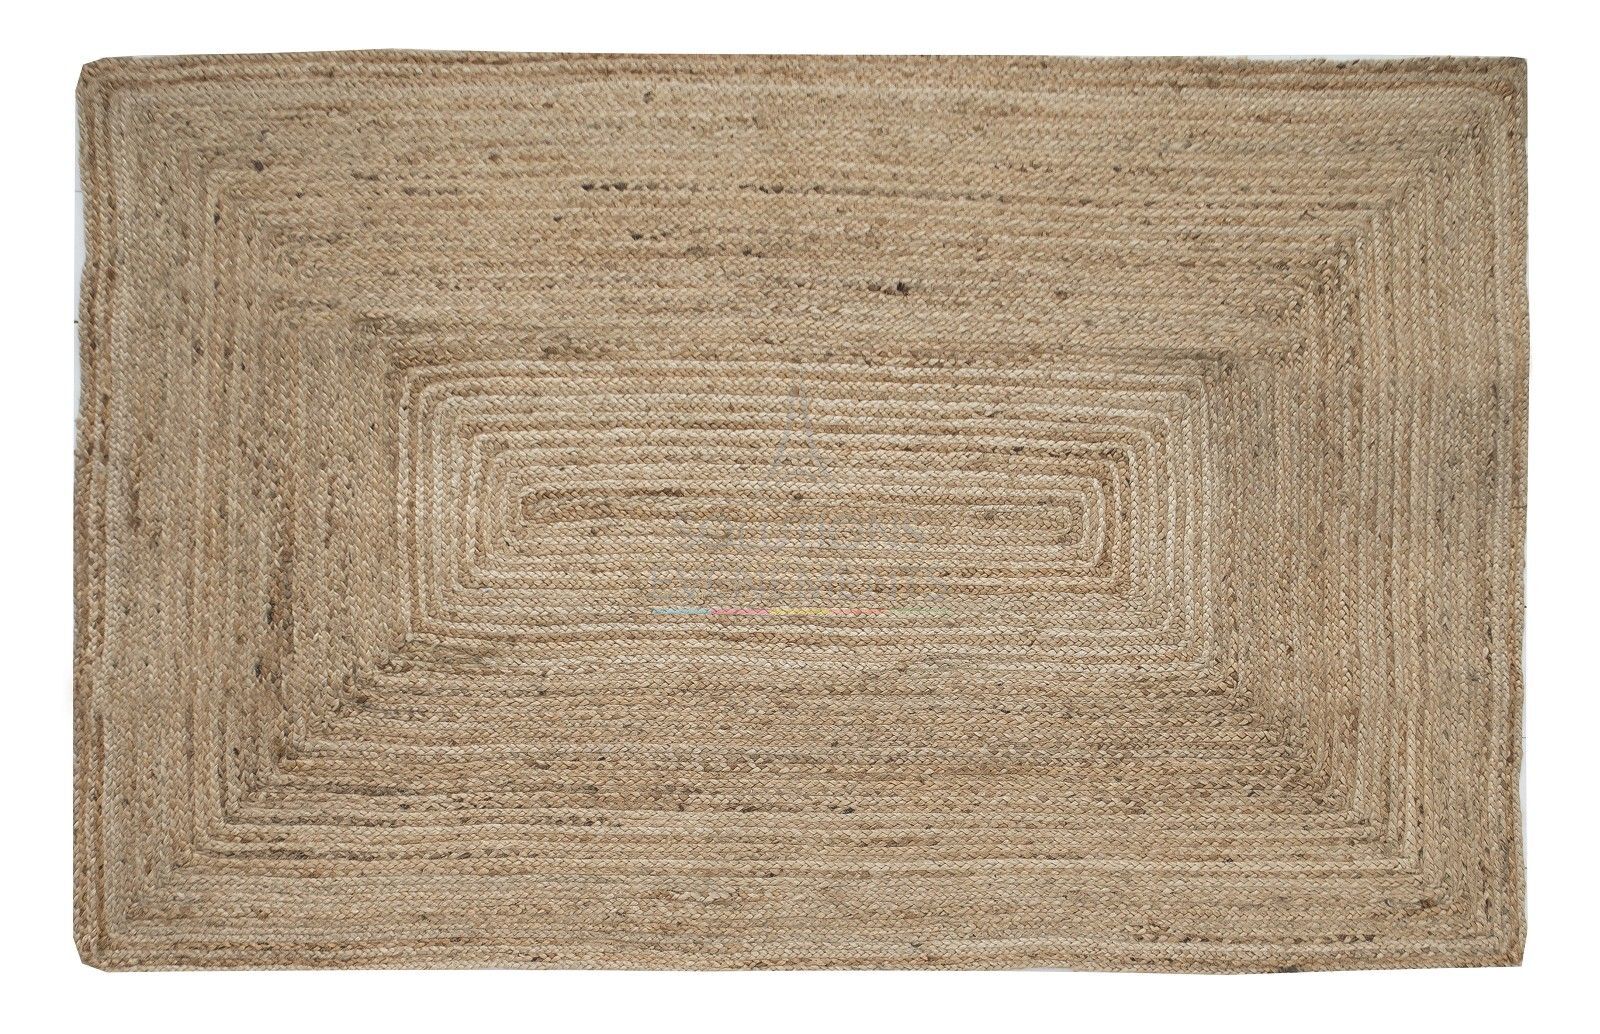 Rental natural jute rectangle rug